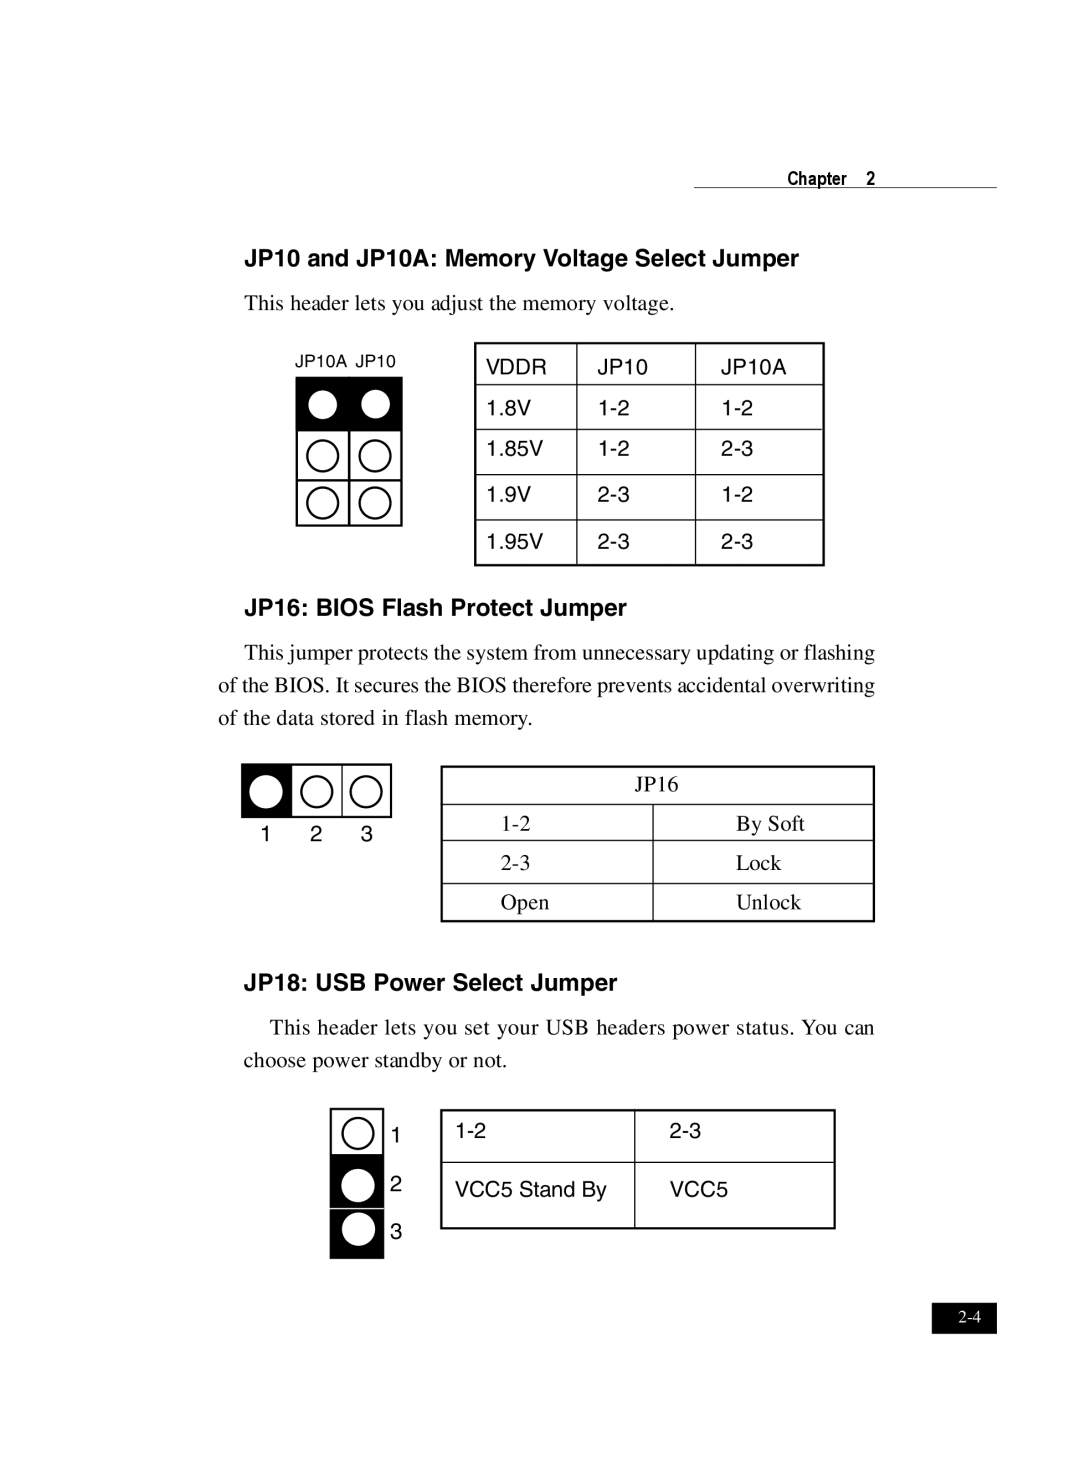 IBM DJ800 JP10 and JP10A Memory Voltage Select Jumper, JP16 BIOS Flash Protect Jumper, JP18 USB Power Select Jumper 